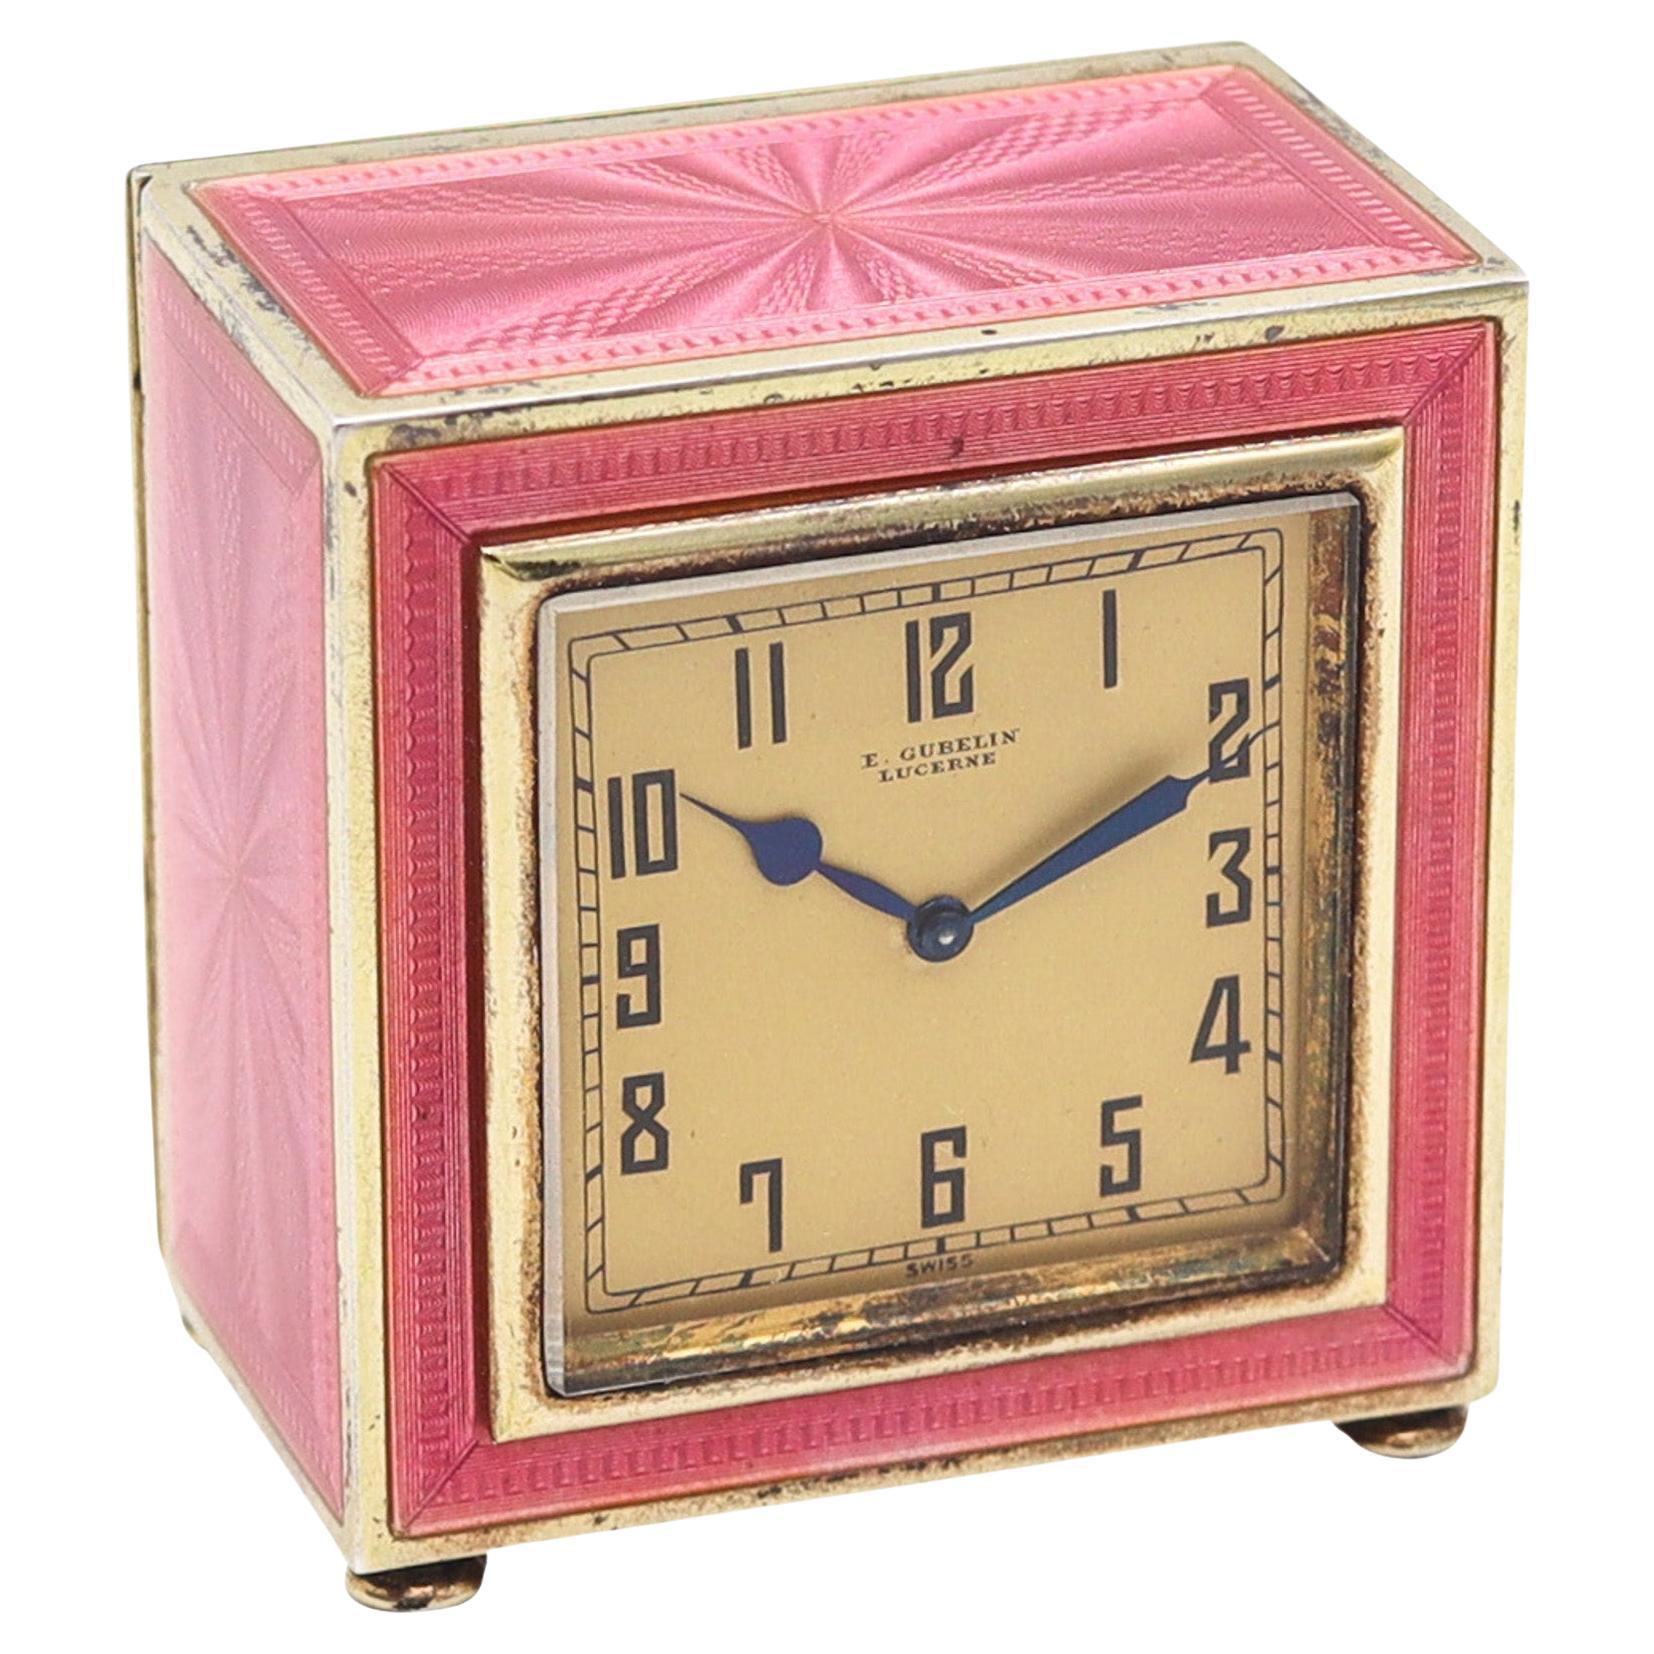 Gubelin 1925 Art Deco Guilloché Enameled Boudoir Desk Clock In .935 Sterling